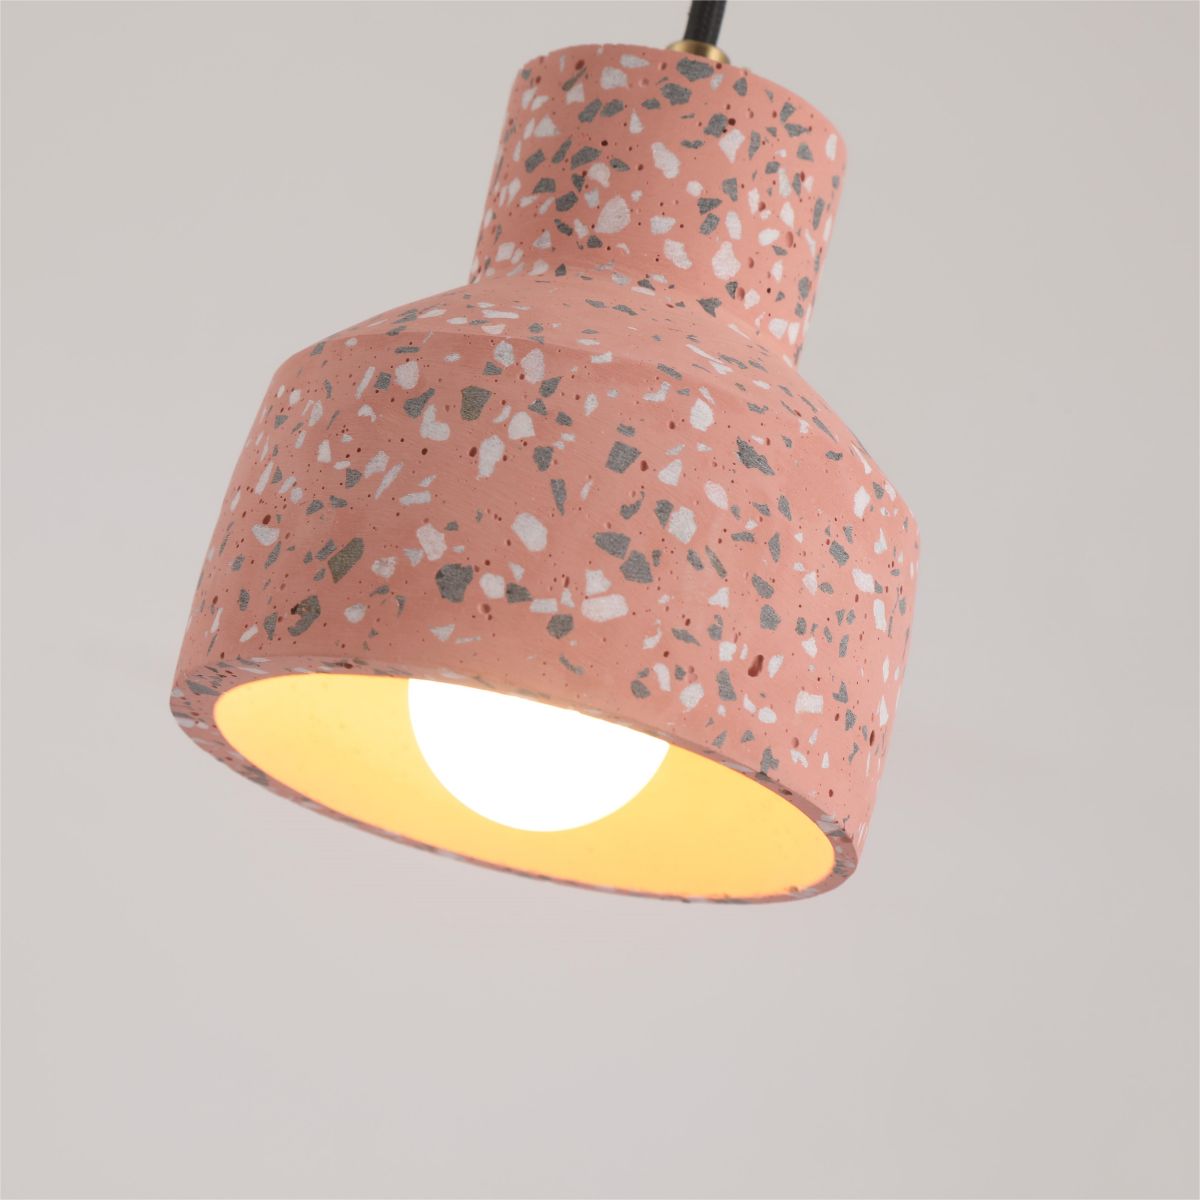 Morandi Pendant Light, Cement, Modern & Industrial, 4 Color